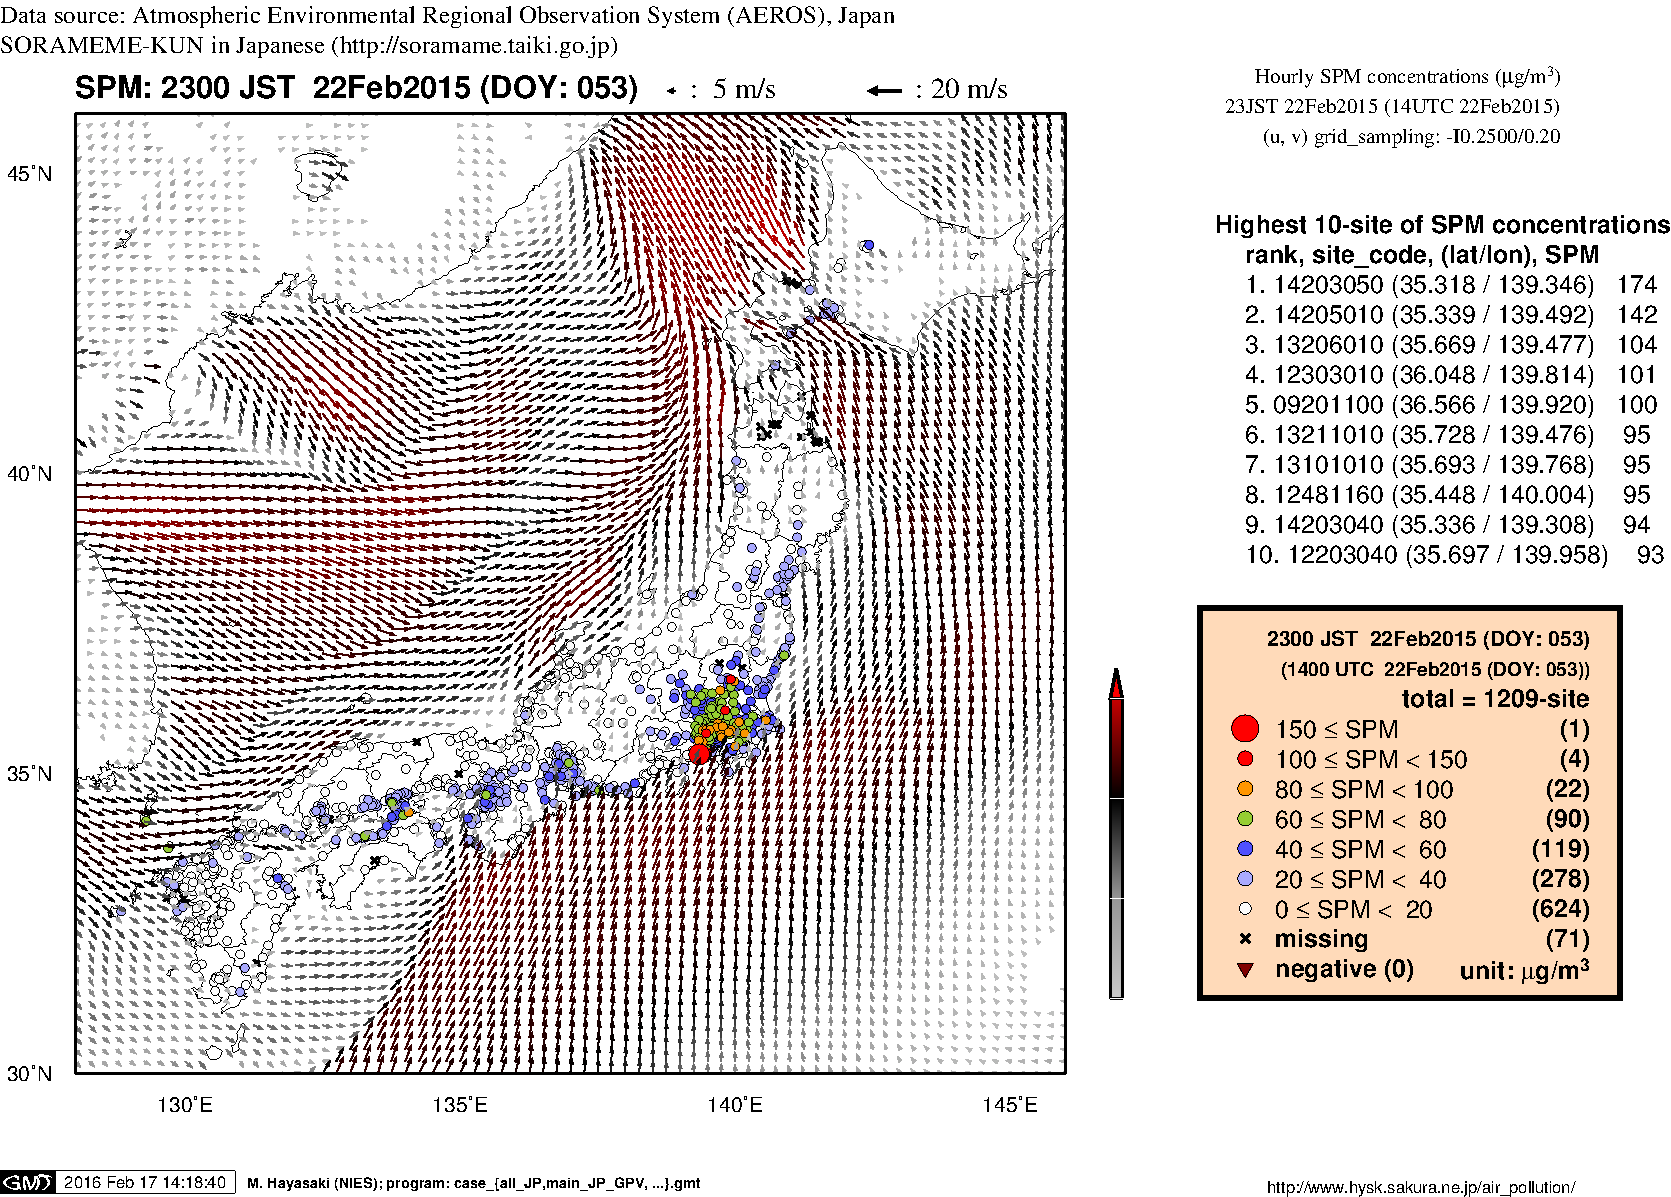 SPM concentration in mainland Japan (23JST 22Feb2015)